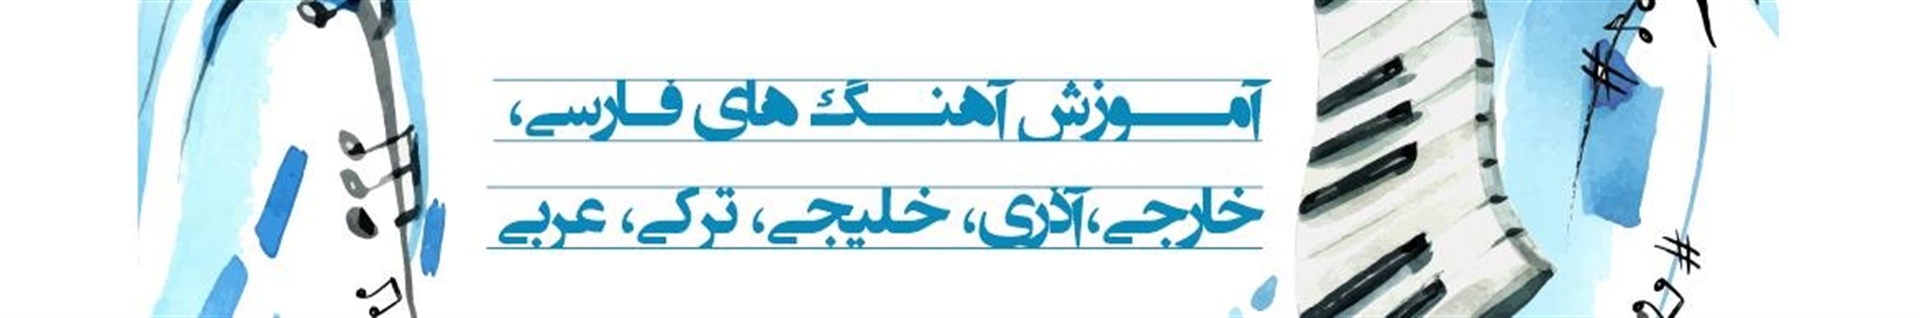 ایرانیان کیبورد (IranKeyboard.com)